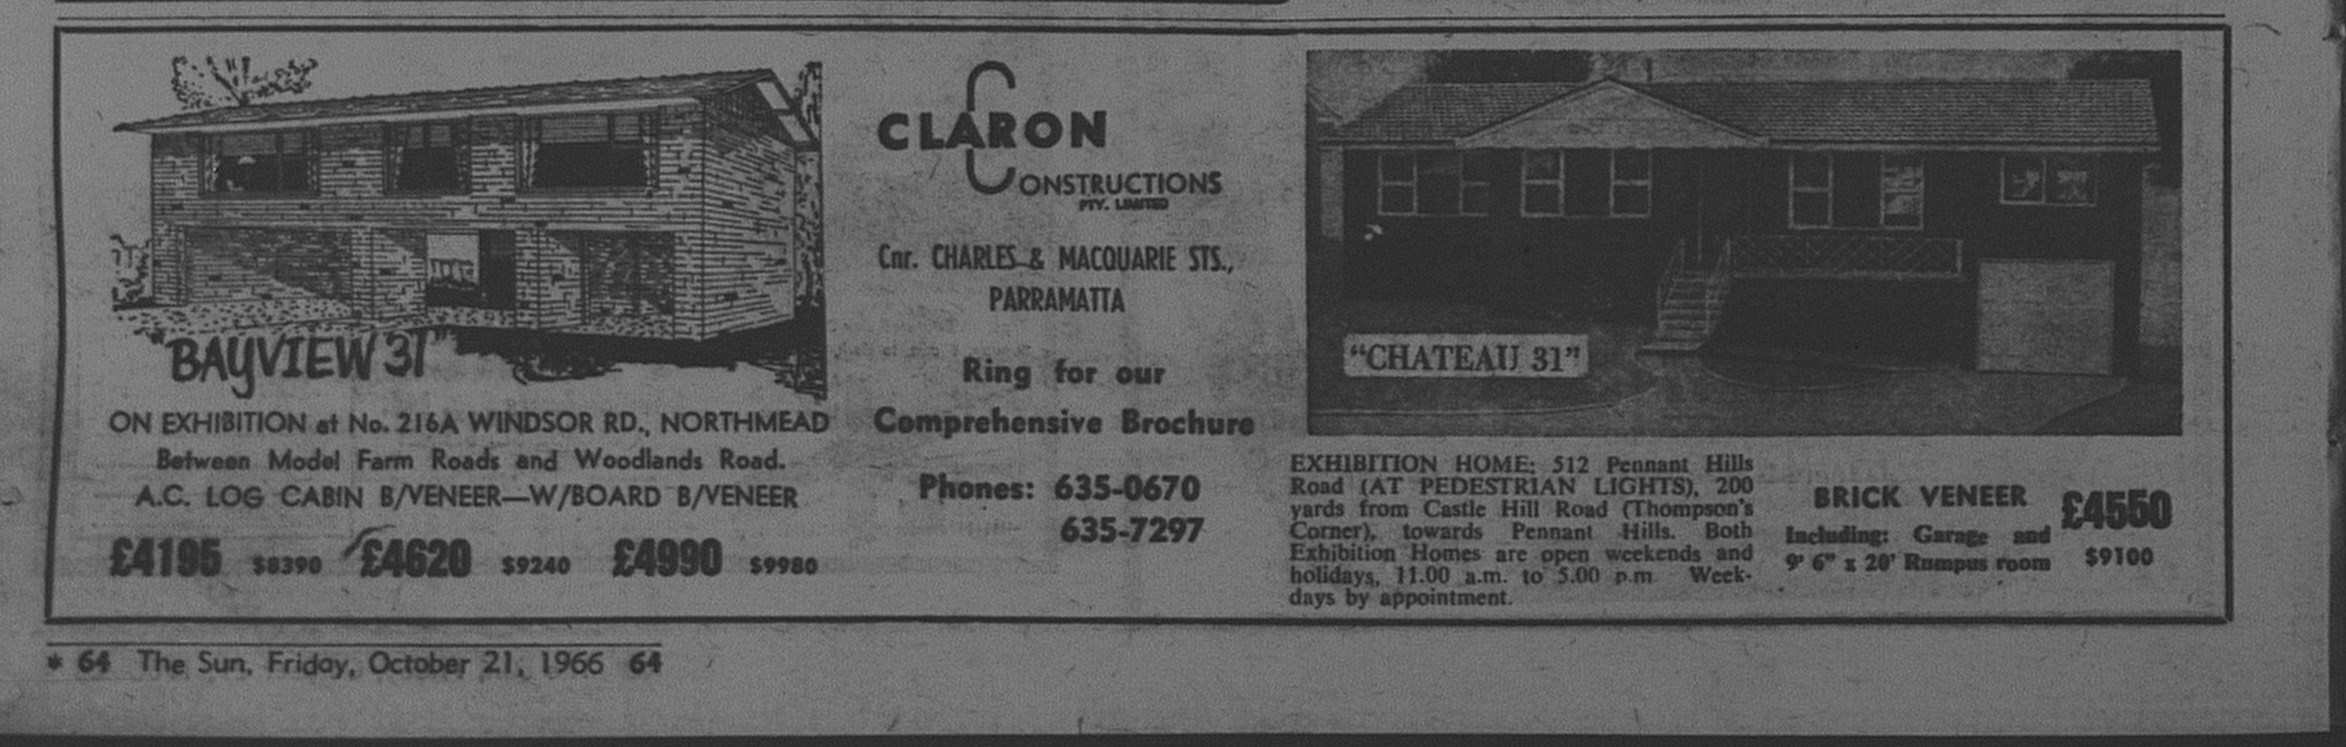 Claron Homes Ad October 21 1966 the sun 64